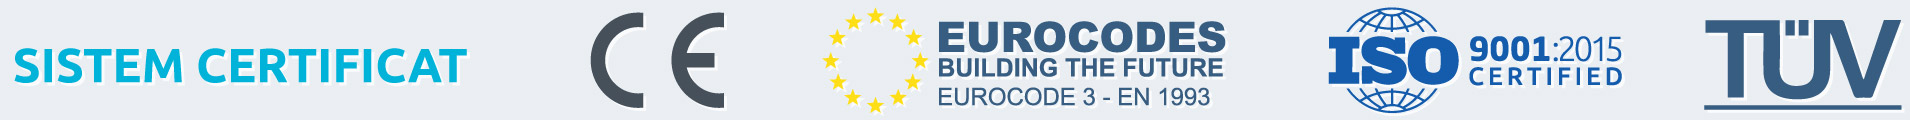 sistem certificat CE, Eurocode 3, ISO 9001/2015, TÜV